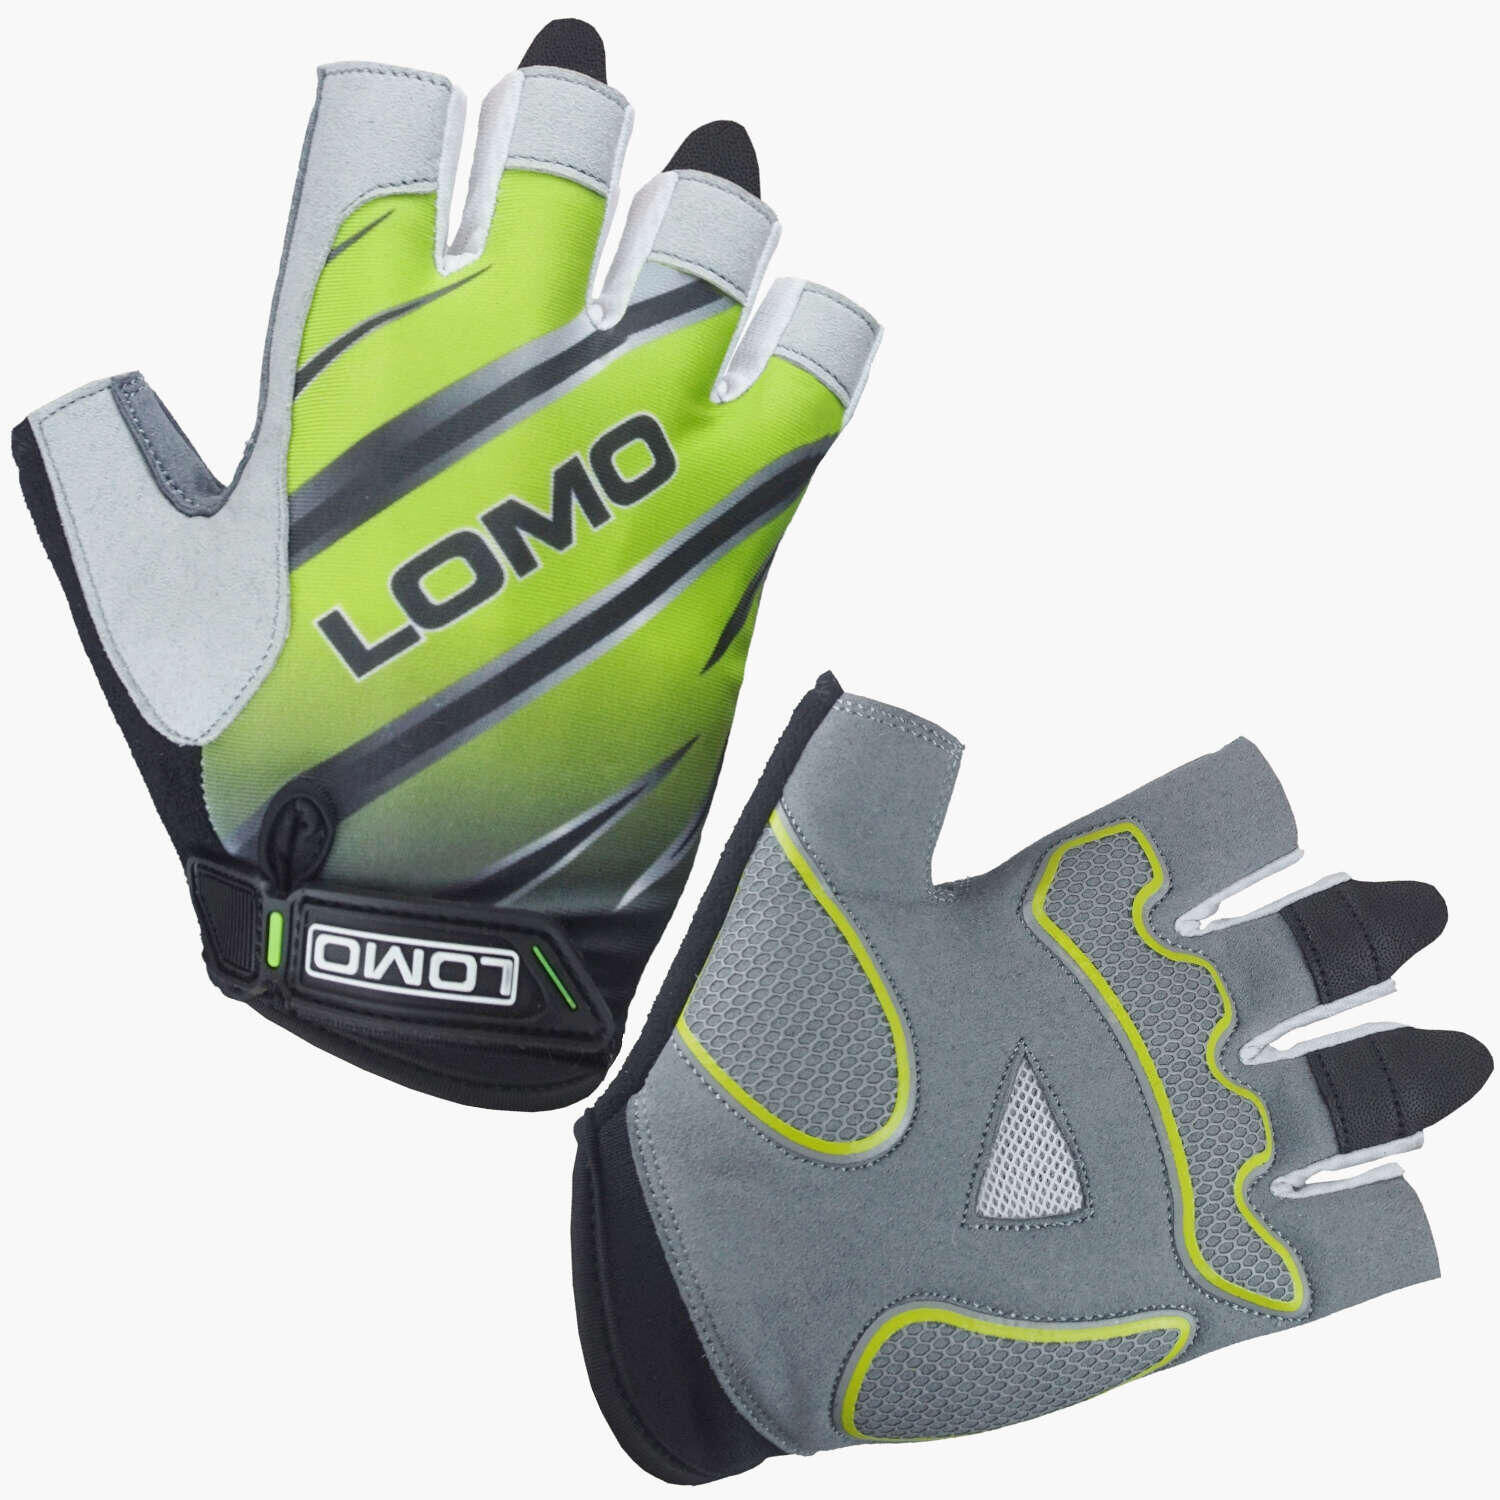 LOMO Lomo SG1 - Short Finger Cycling Gloves - Grey / Black / Lime